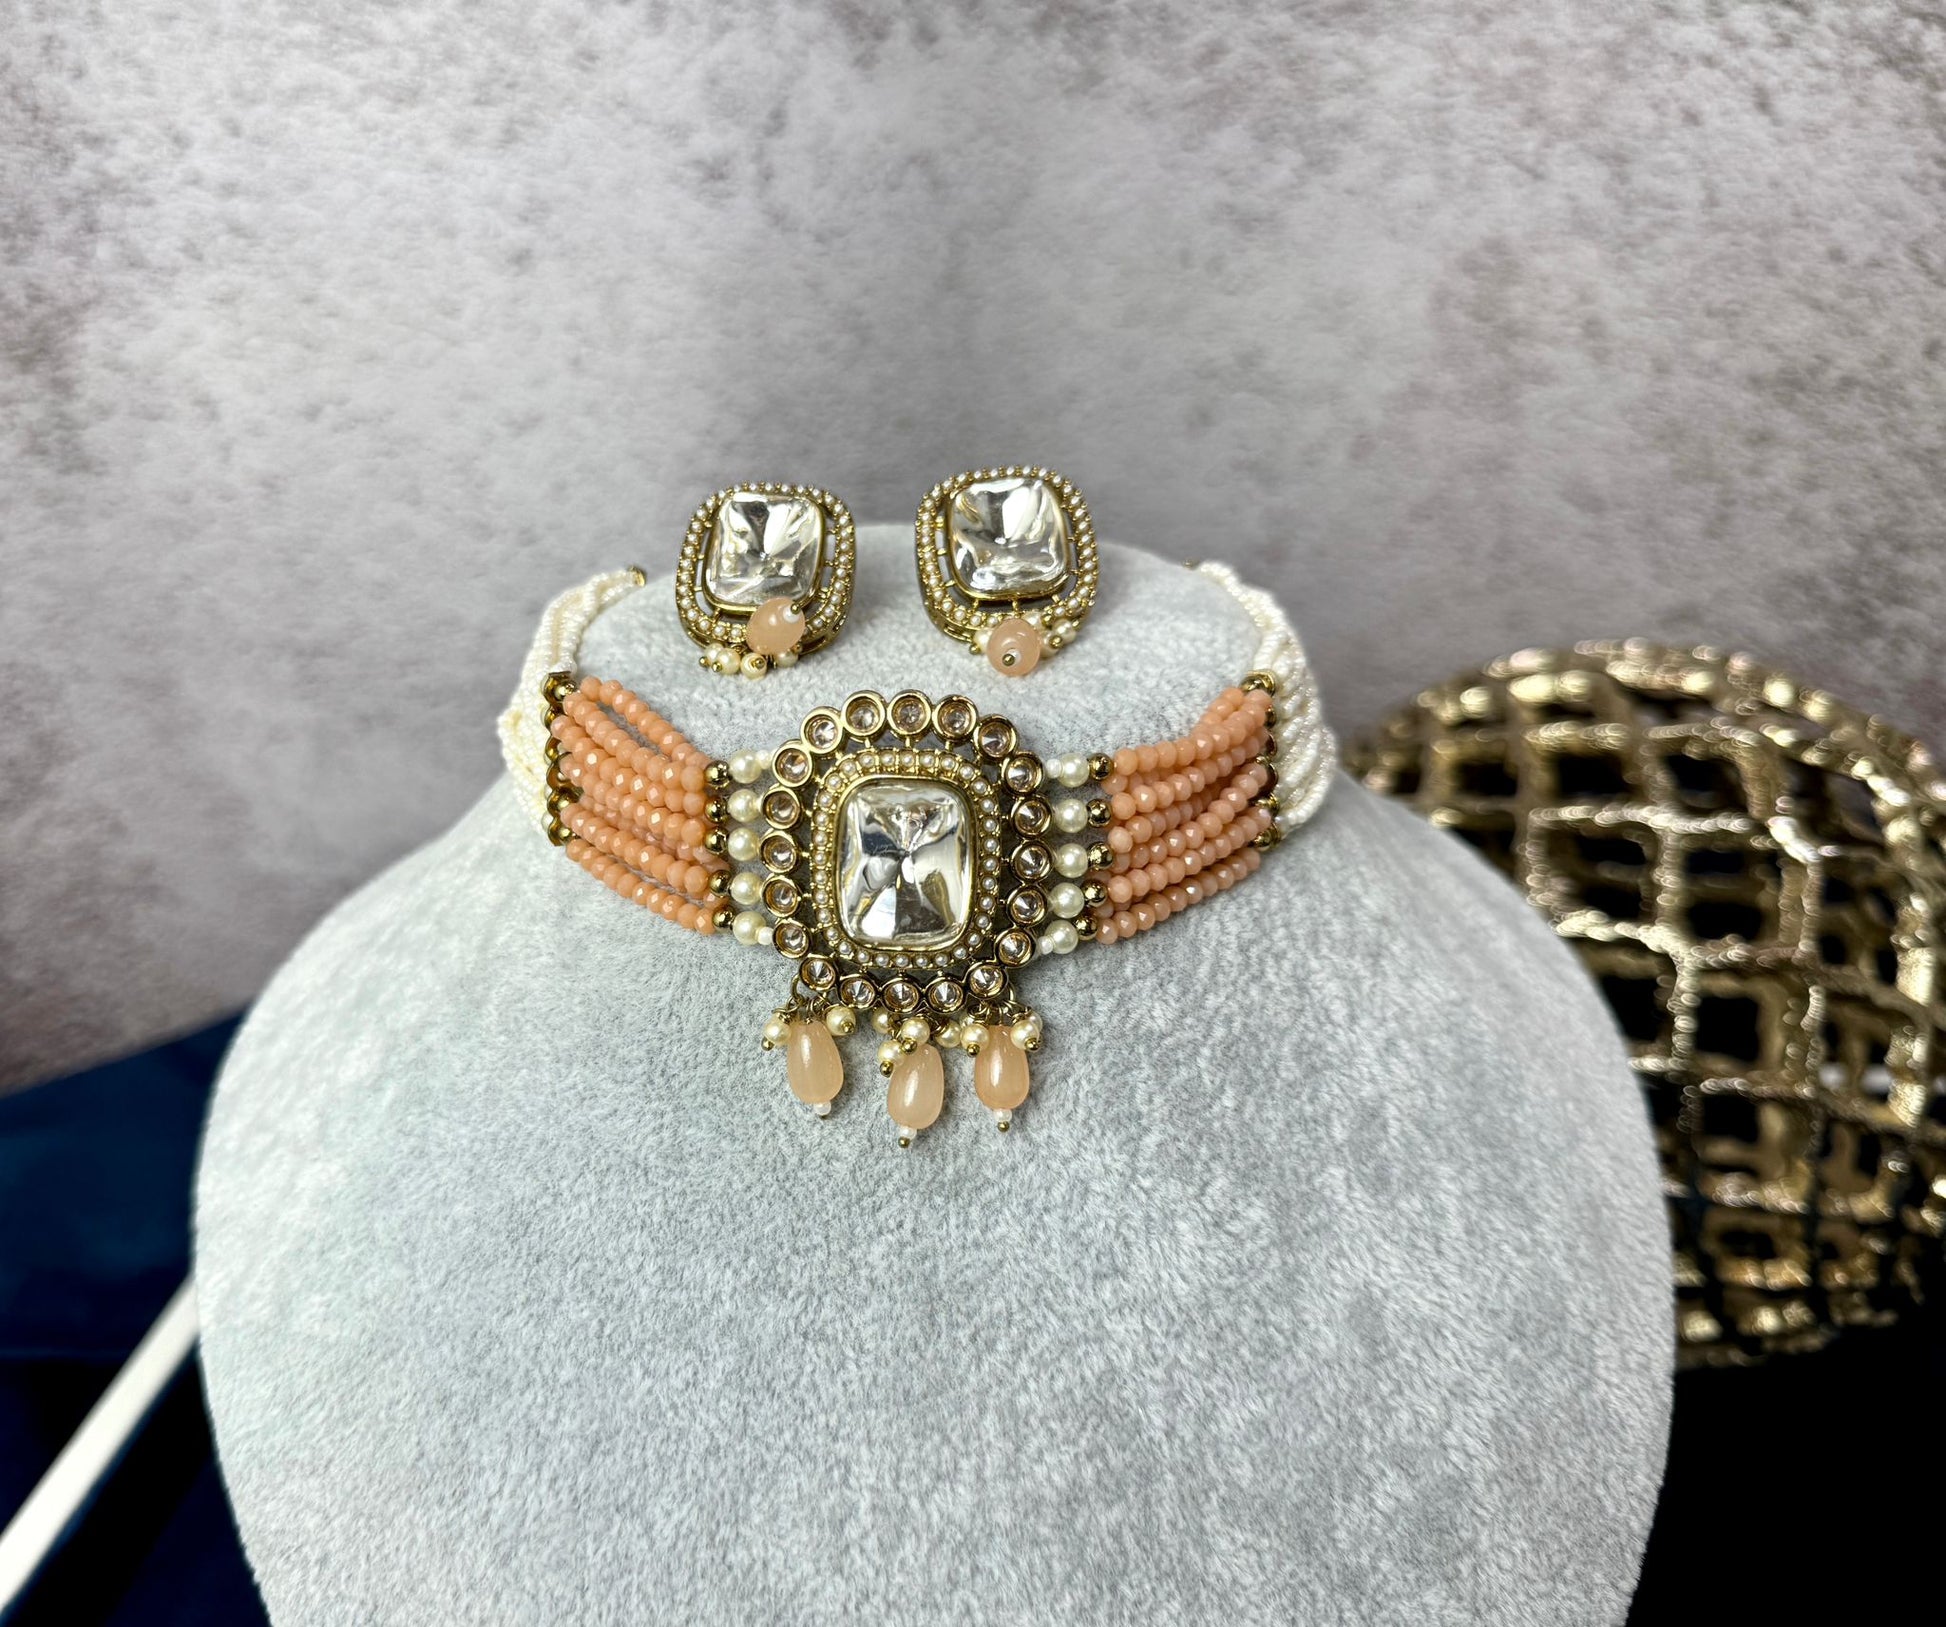 Handcrafted Peach Polki Jewelry - Graceful Choker Design